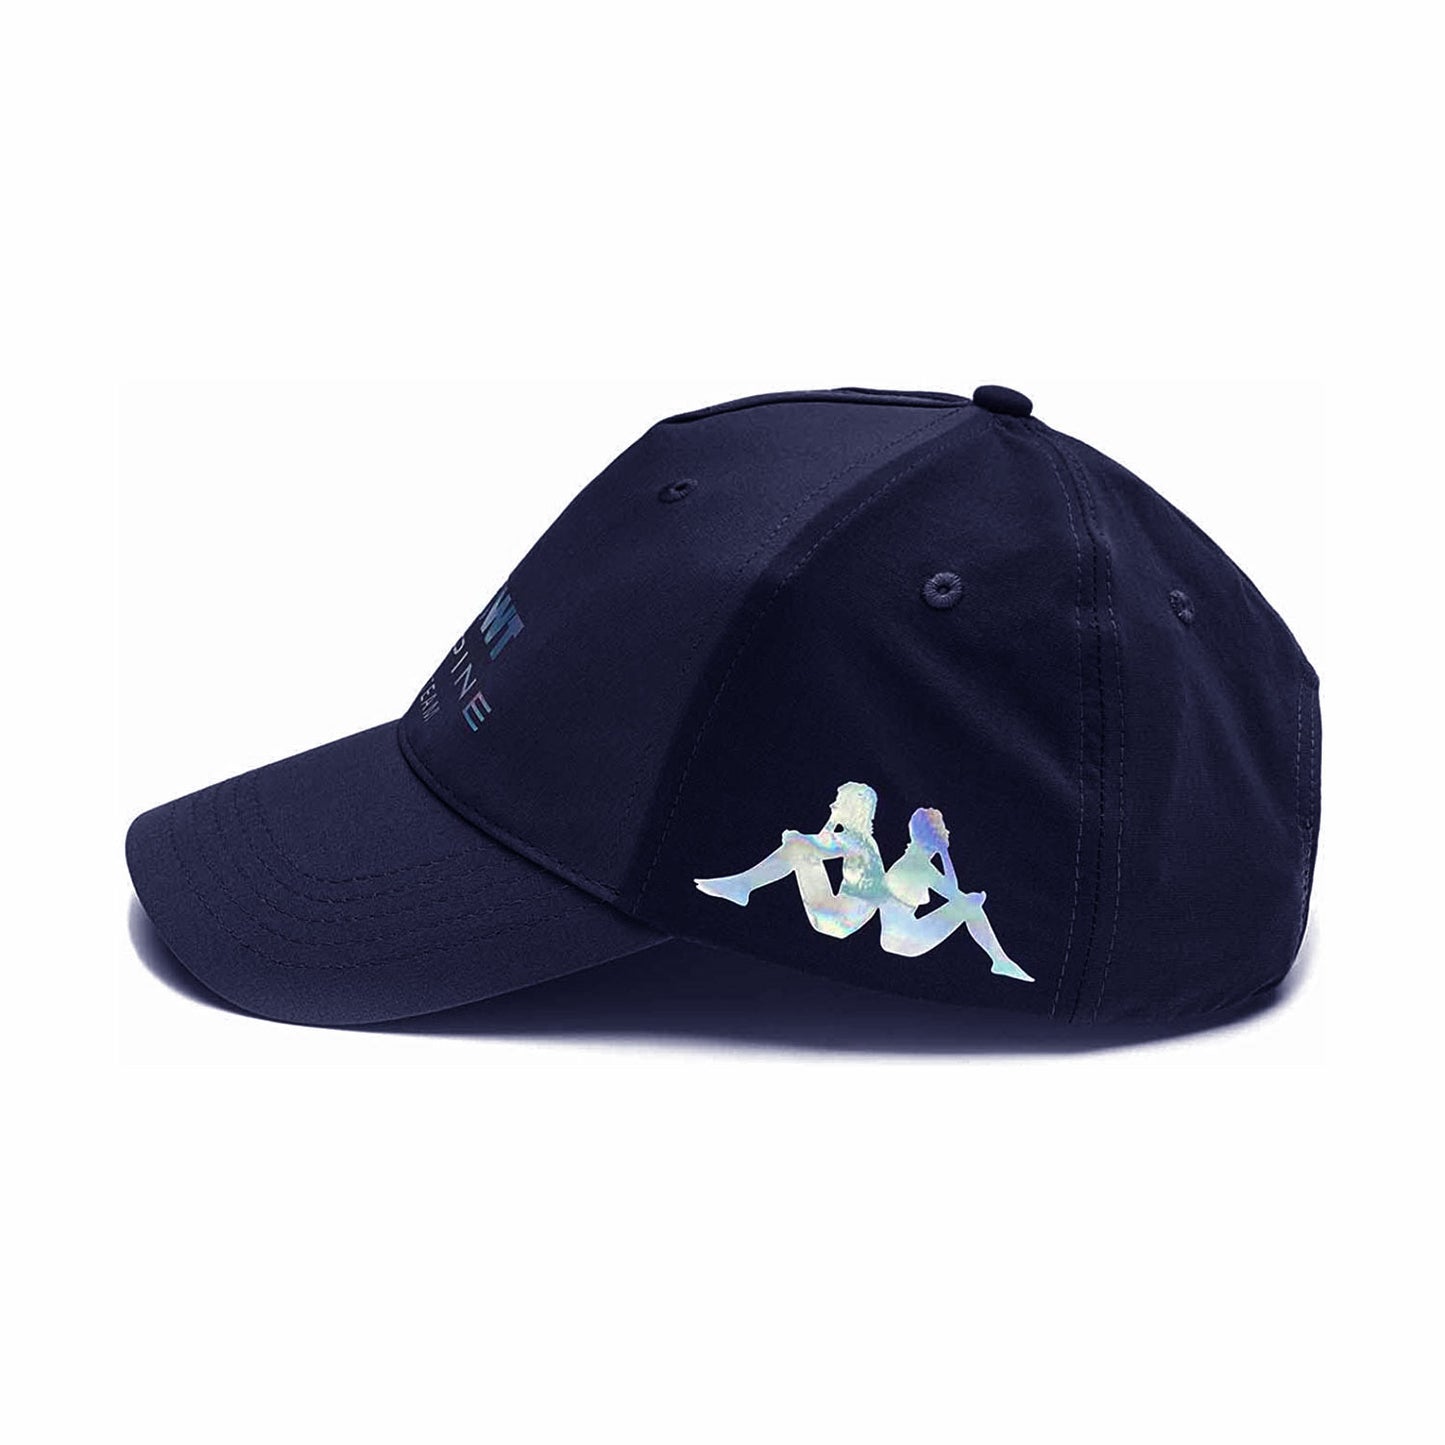 2023 Team Blue Alpine F1 baseball cap